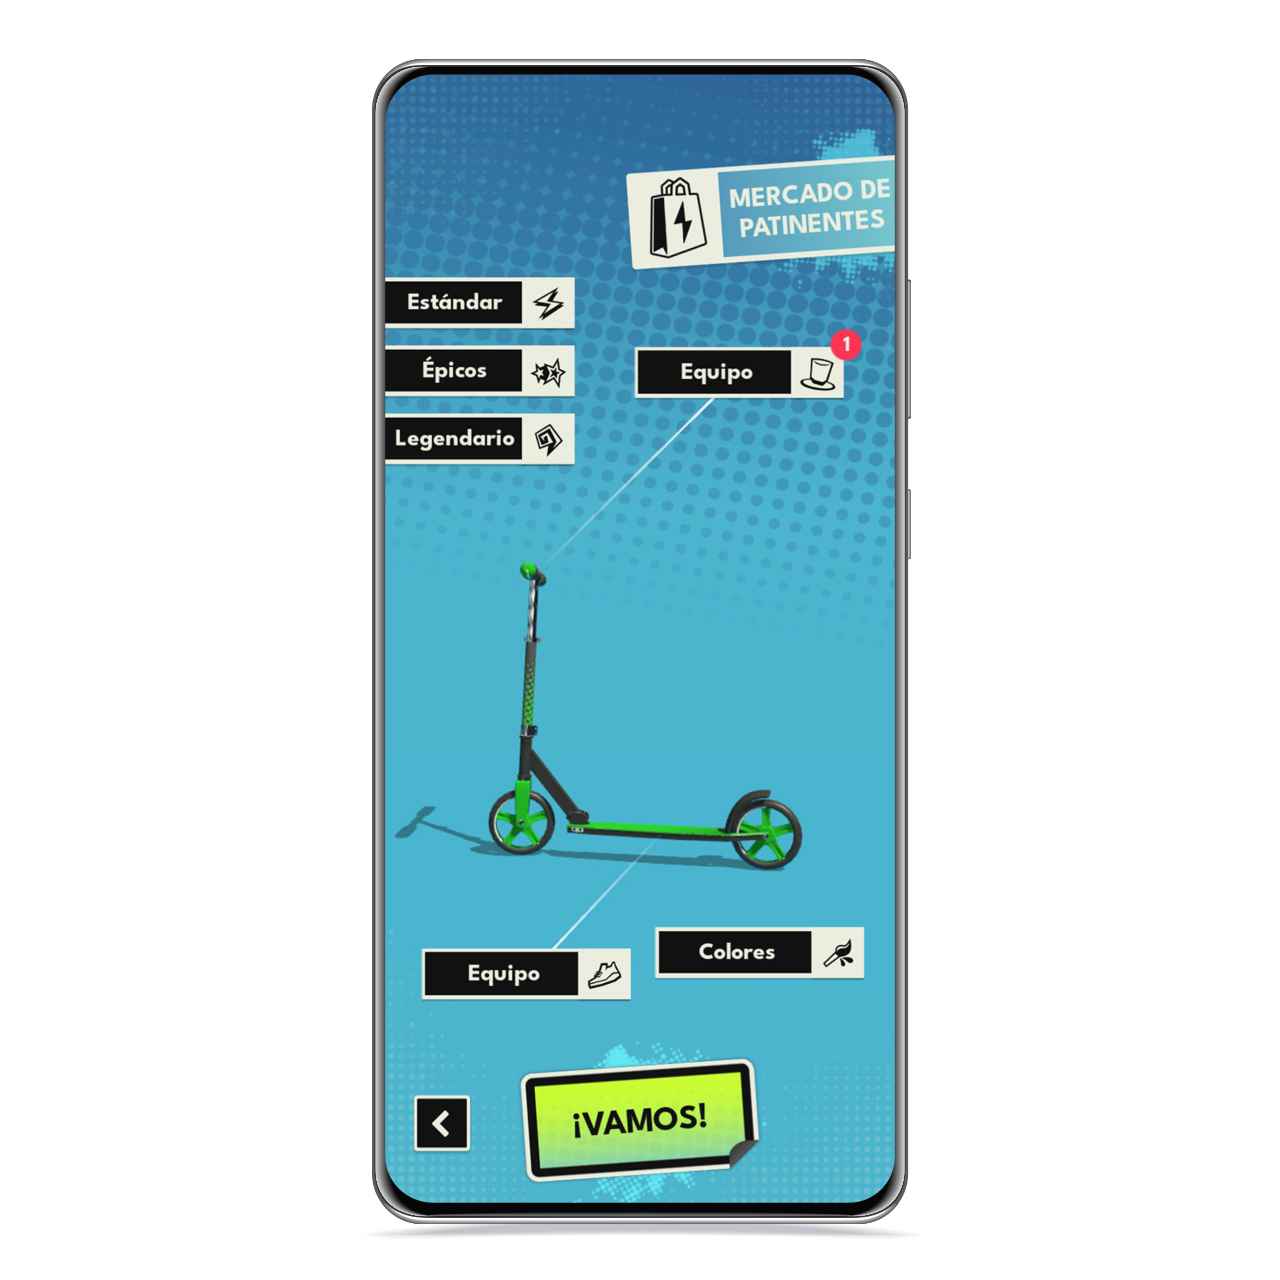 Touchgrind Scooter personalización